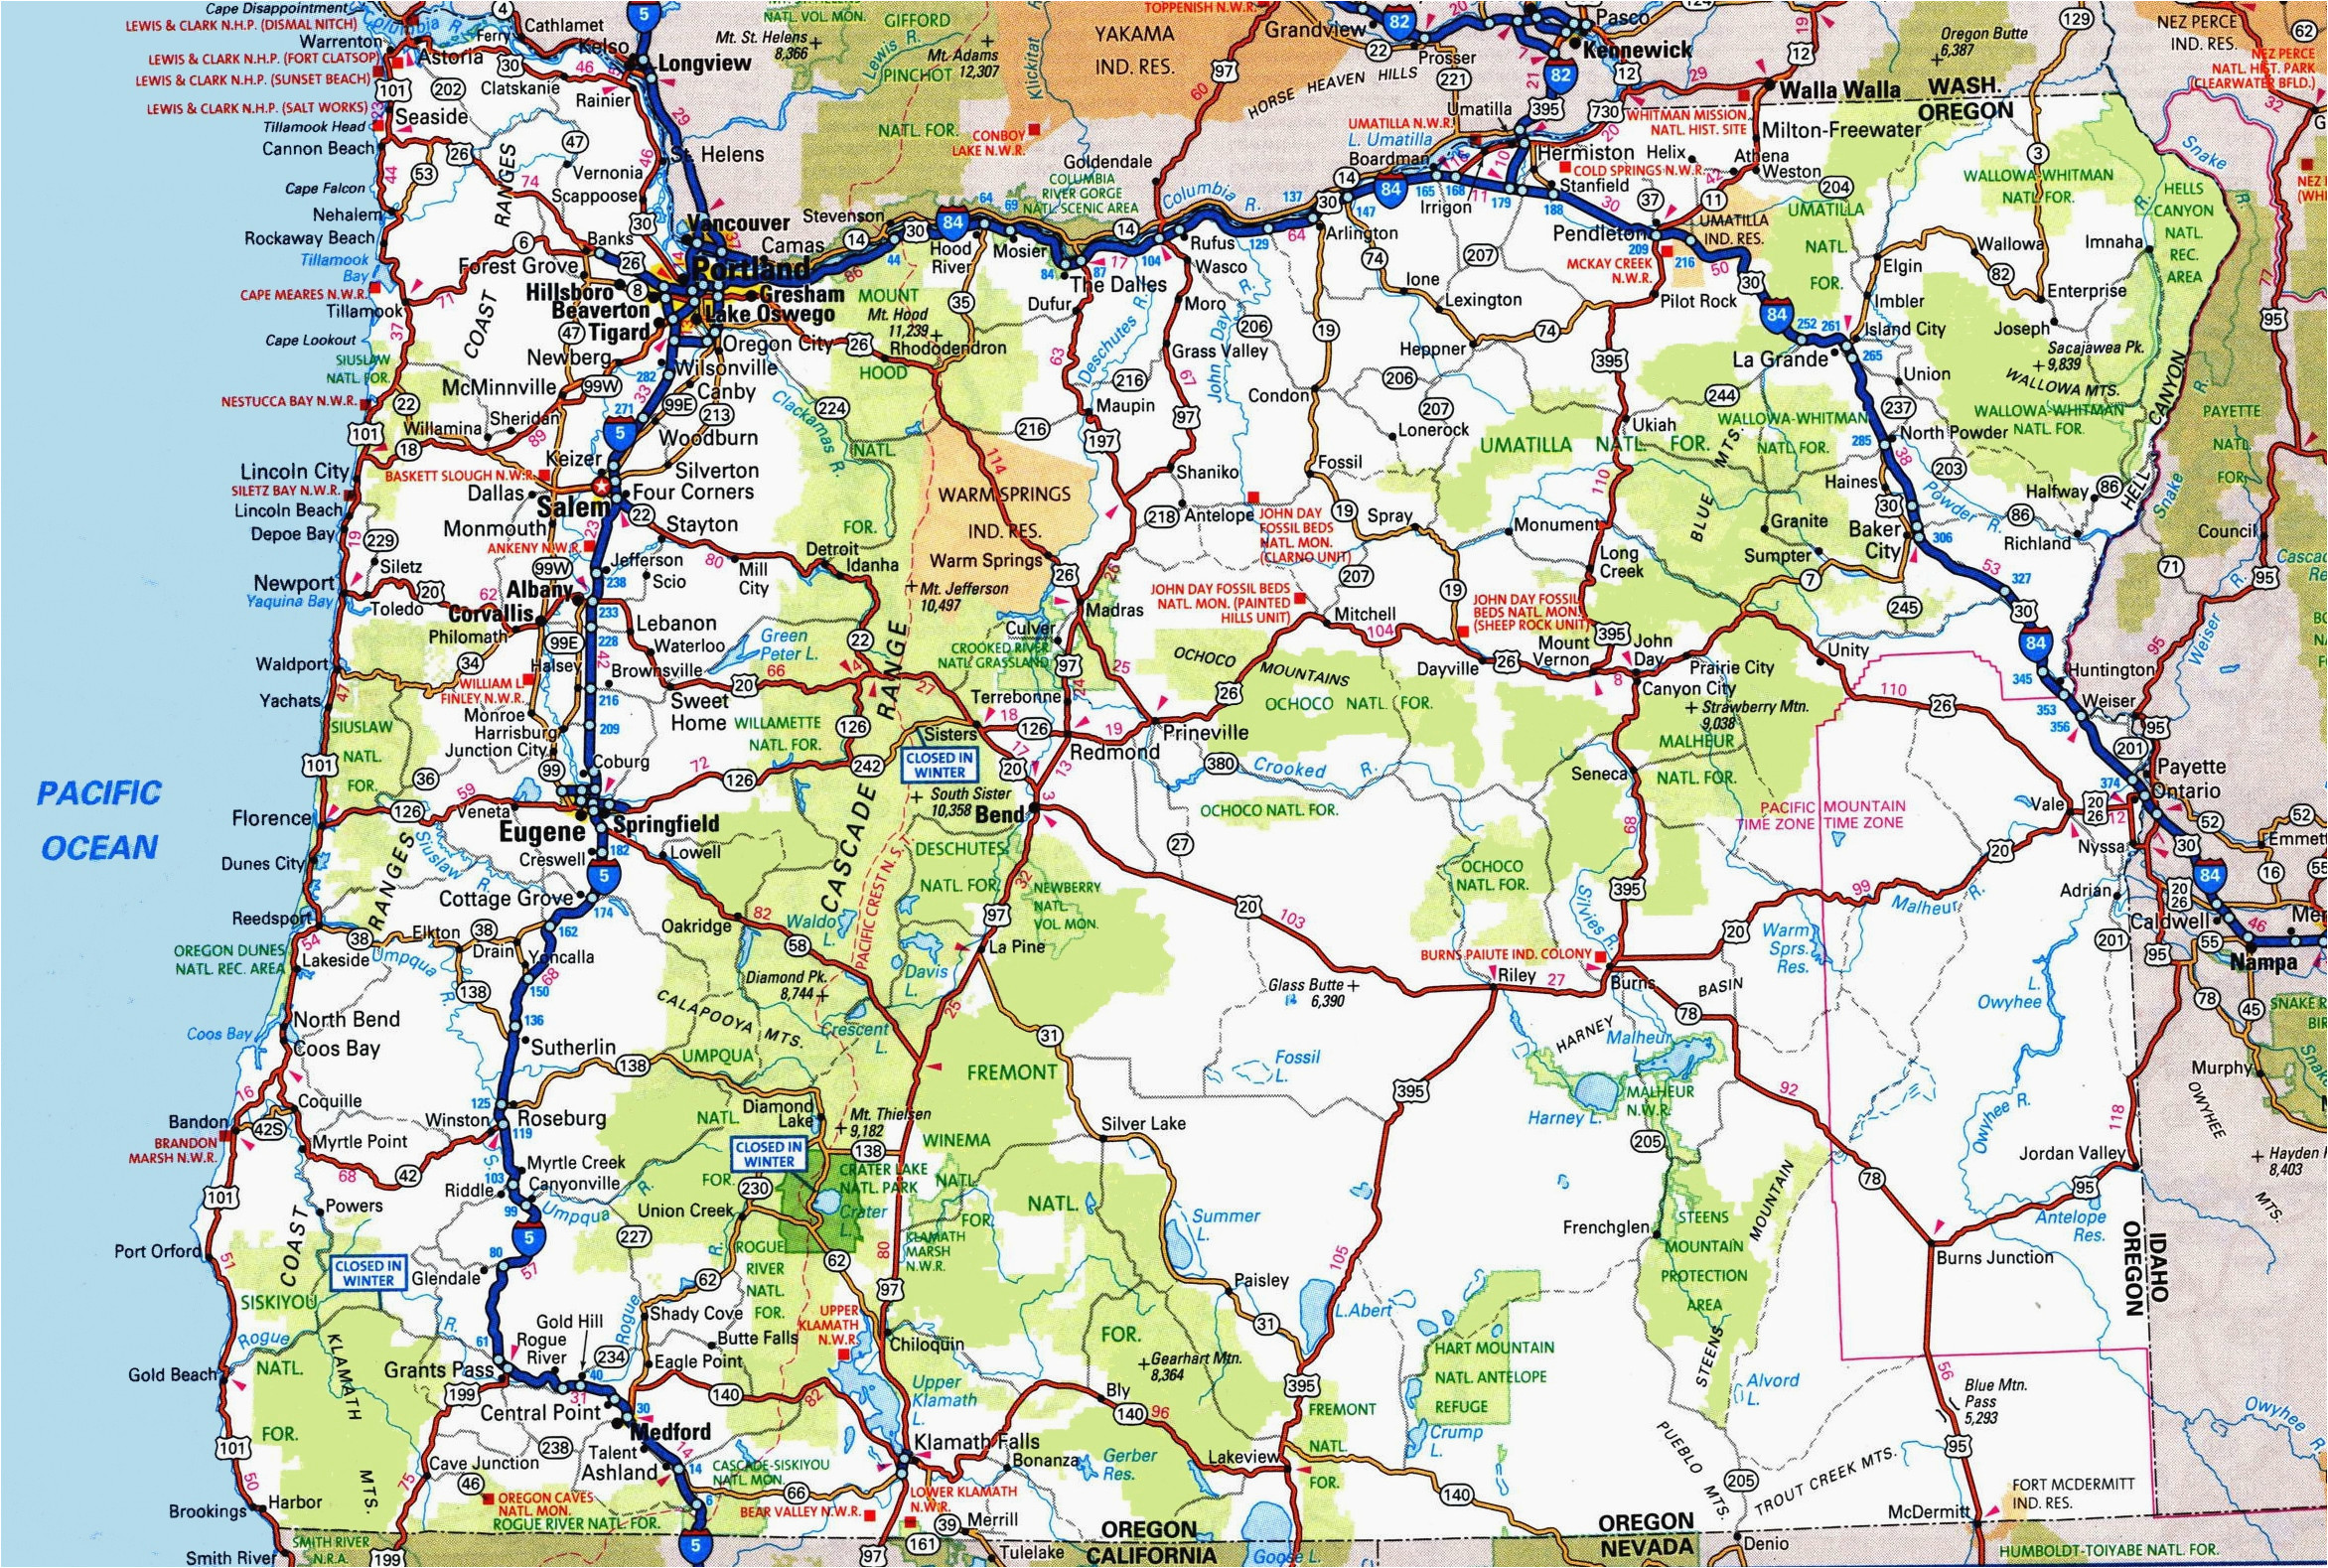 Driving Map Of oregon Highway Map Of oregon State Secretmuseum